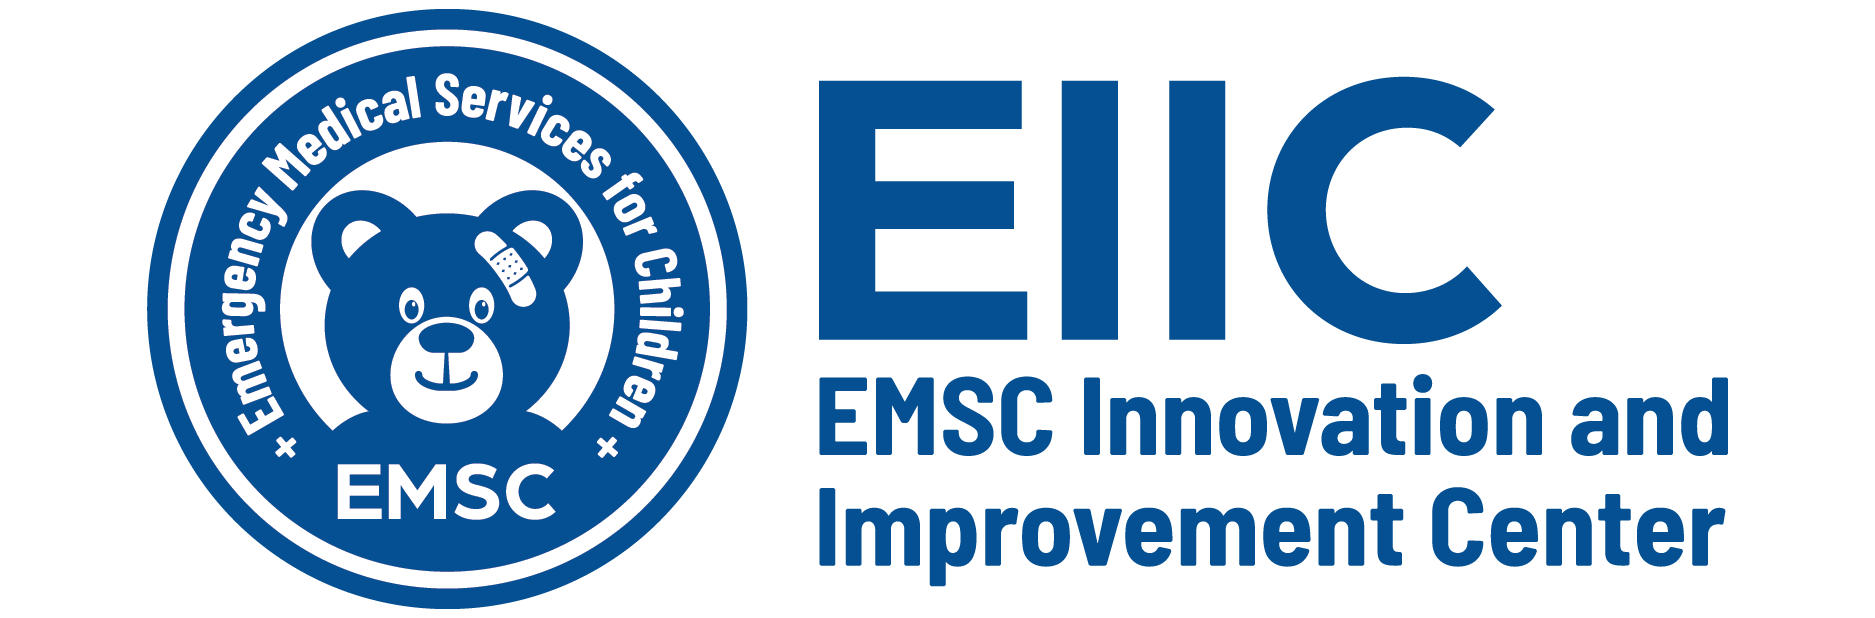 EMSC Innovation and Improvement Center logo